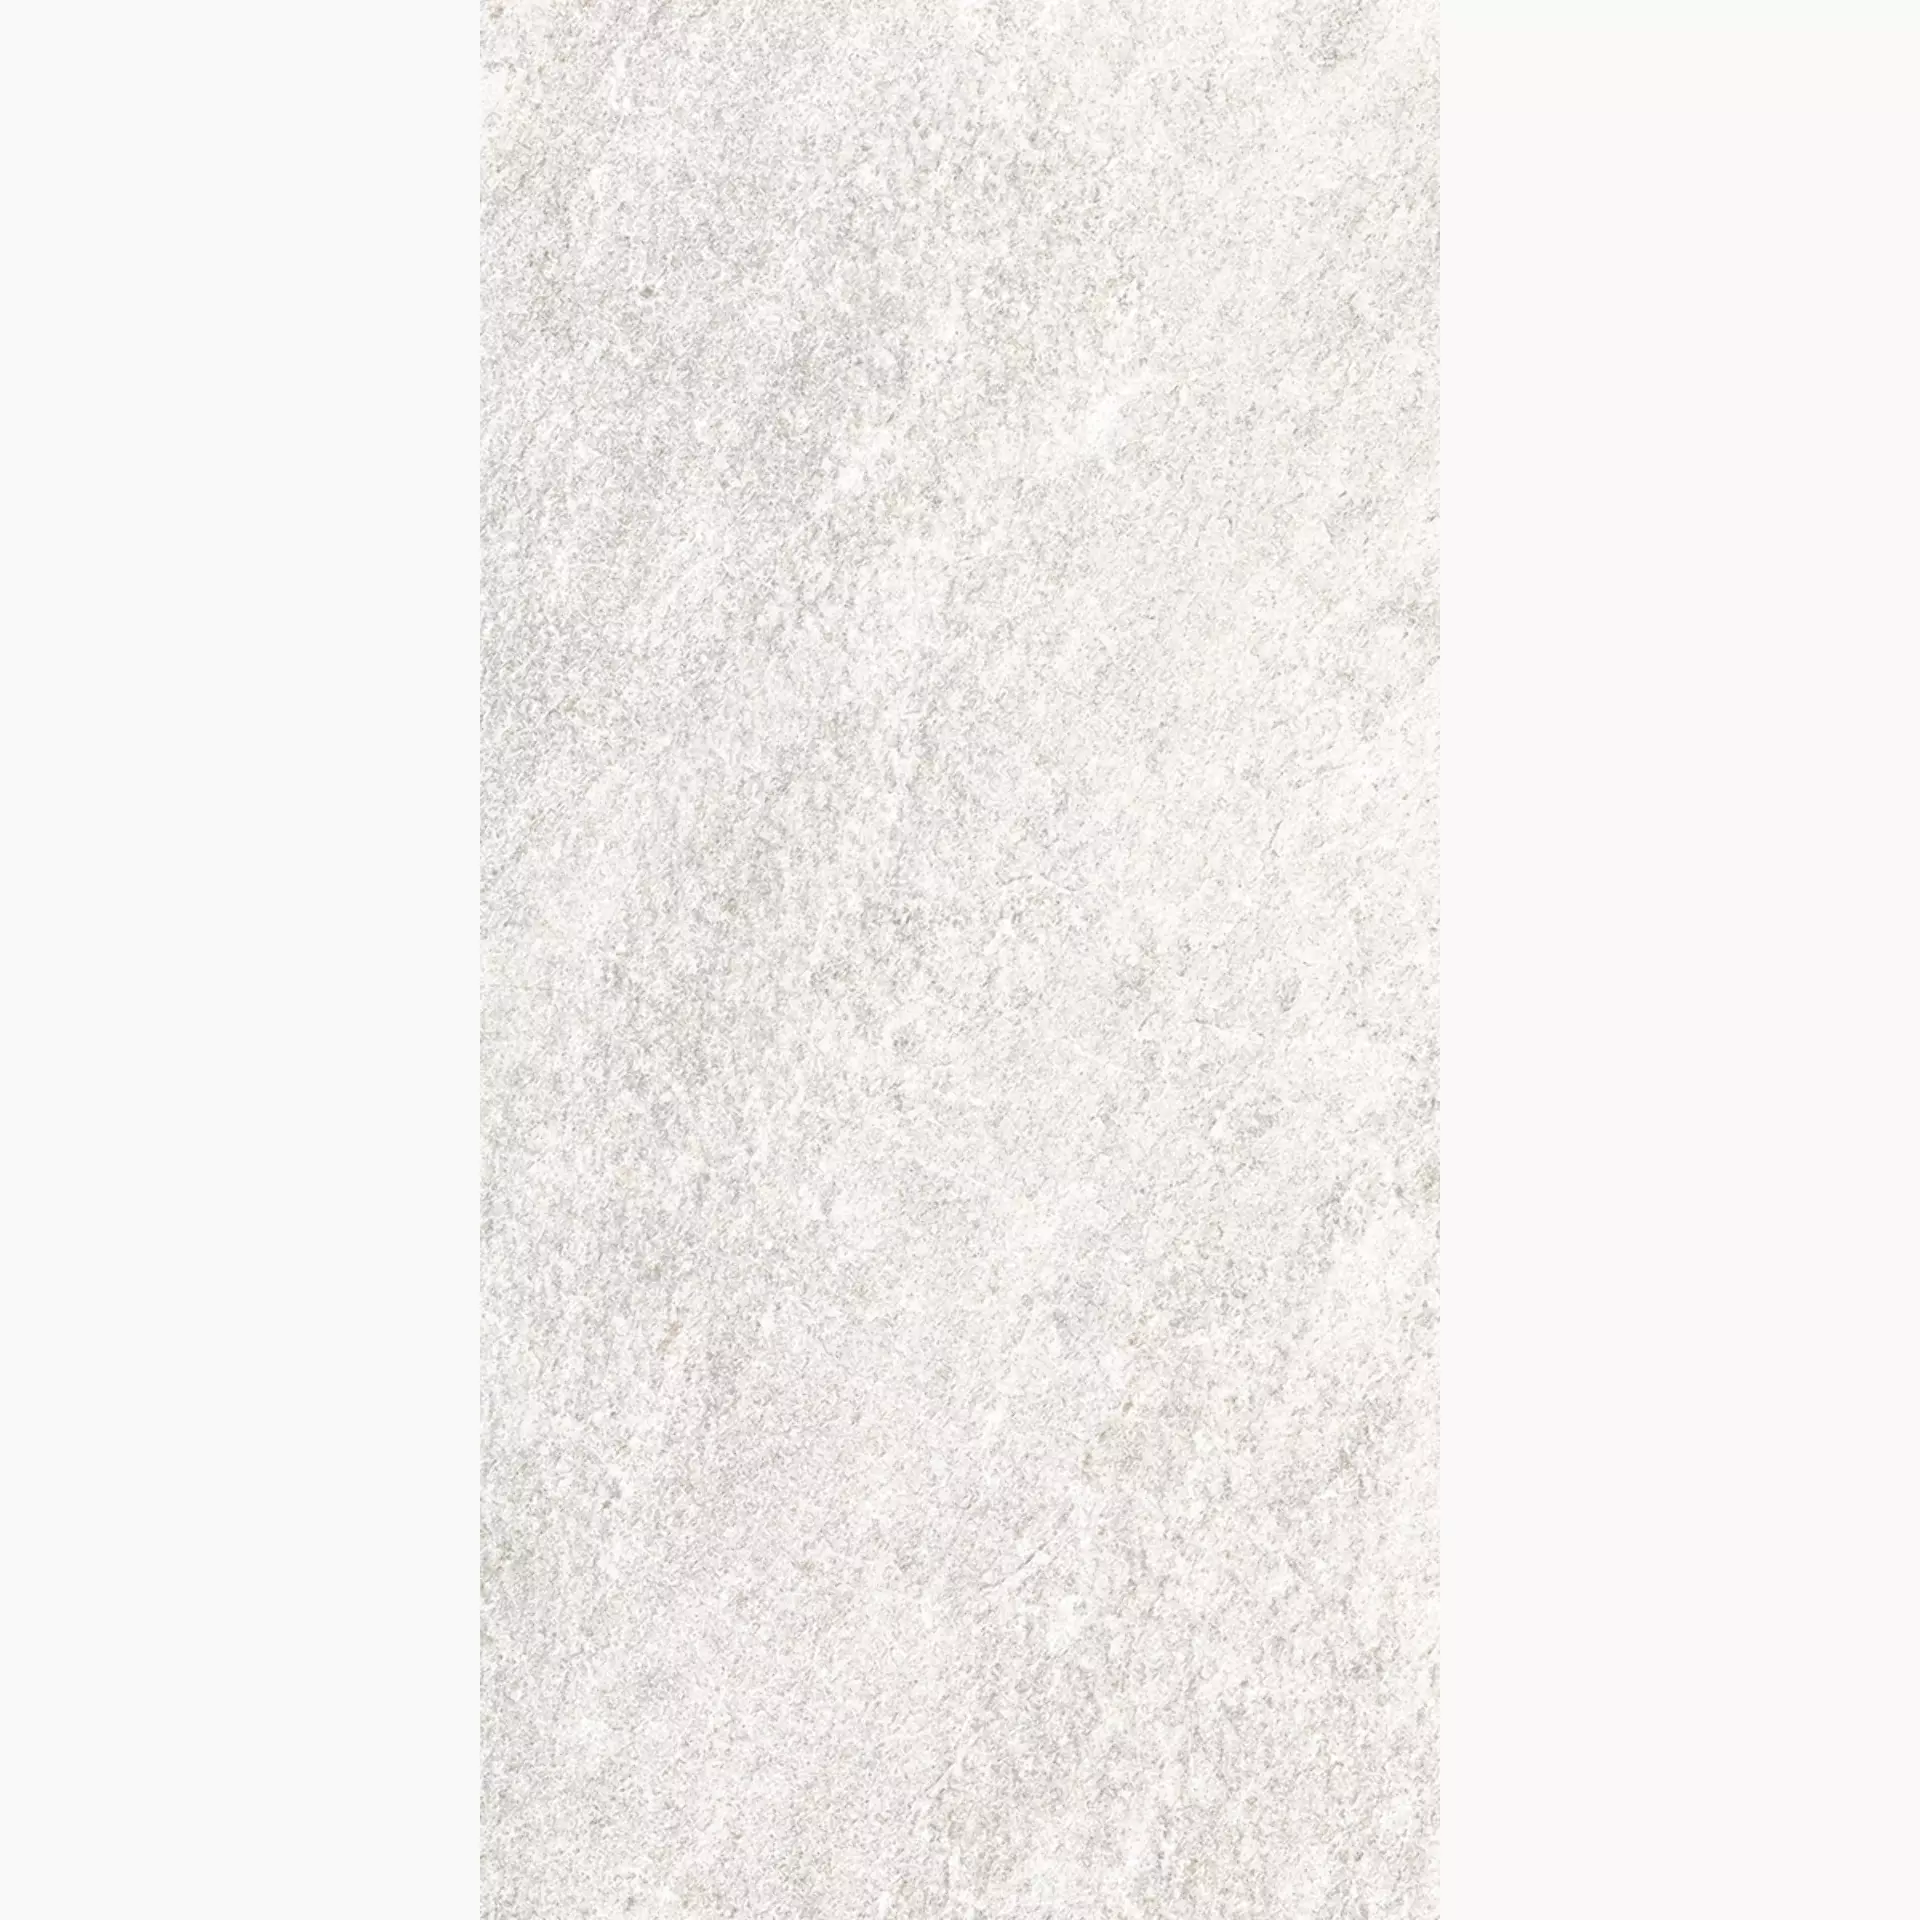 Rondine Quarzi White Naturale J87301 30x60cm rectified 9,5mm